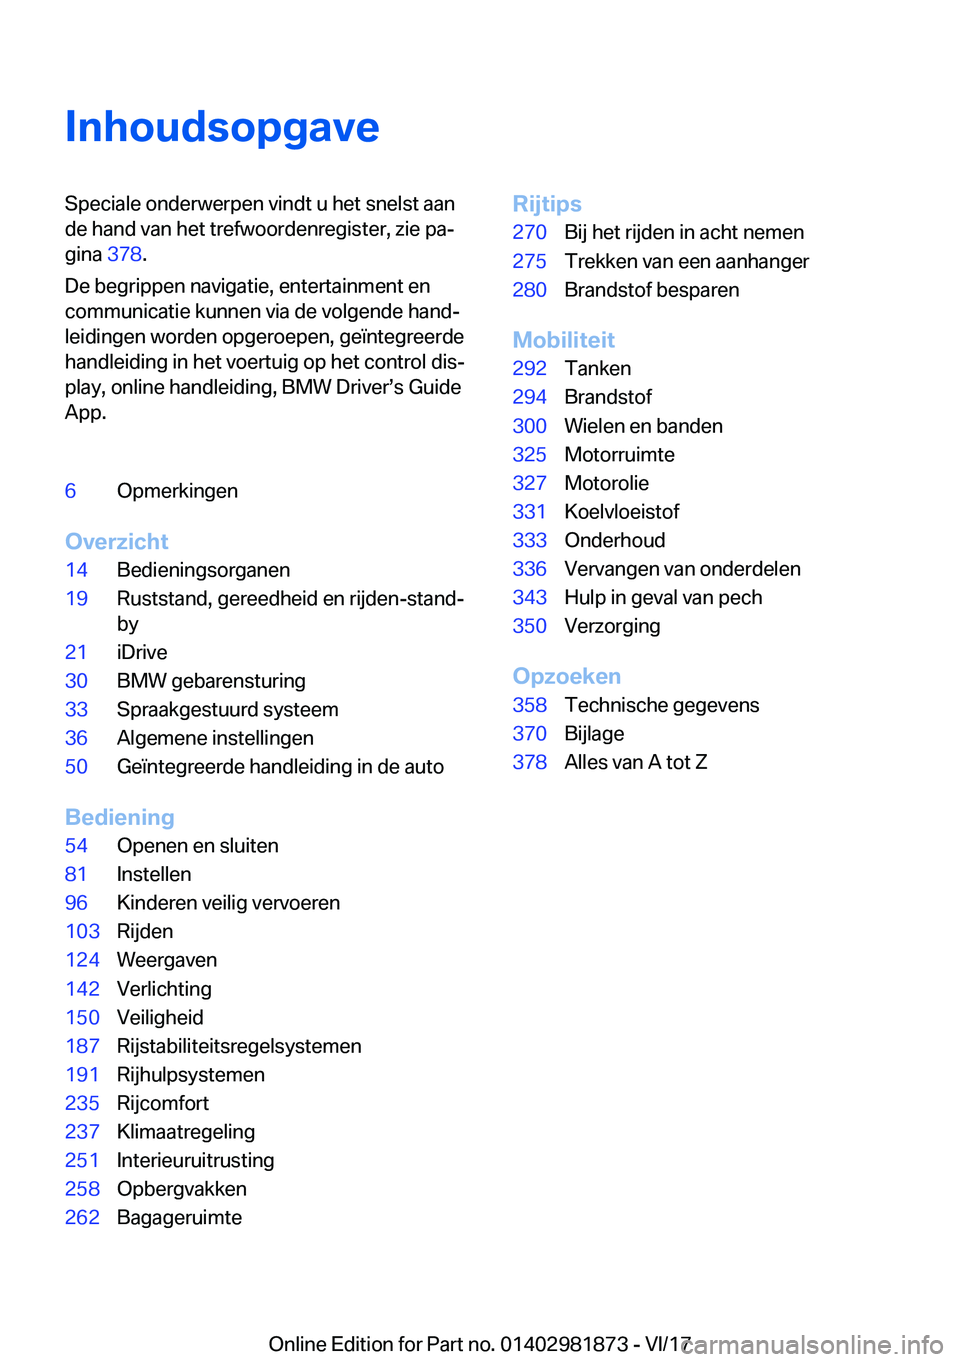 BMW 5 SERIES 2018  Instructieboekjes (in Dutch) �I�n�h�o�u�d�s�o�p�g�a�v�e�S�p�e�c�i�a�l�e� �o�n�d�e�r�w�e�r�p�e�n� �v�i�n�d�t� �u� �h�e�t� �s�n�e�l�s�t� �a�a�n�d�e� �h�a�n�d� �v�a�n� �h�e�t� �t�r�e�f�w�o�o�r�d�e�n�r�e�g�i�s�t�e�r�,� �z�i�e� �p�a#j